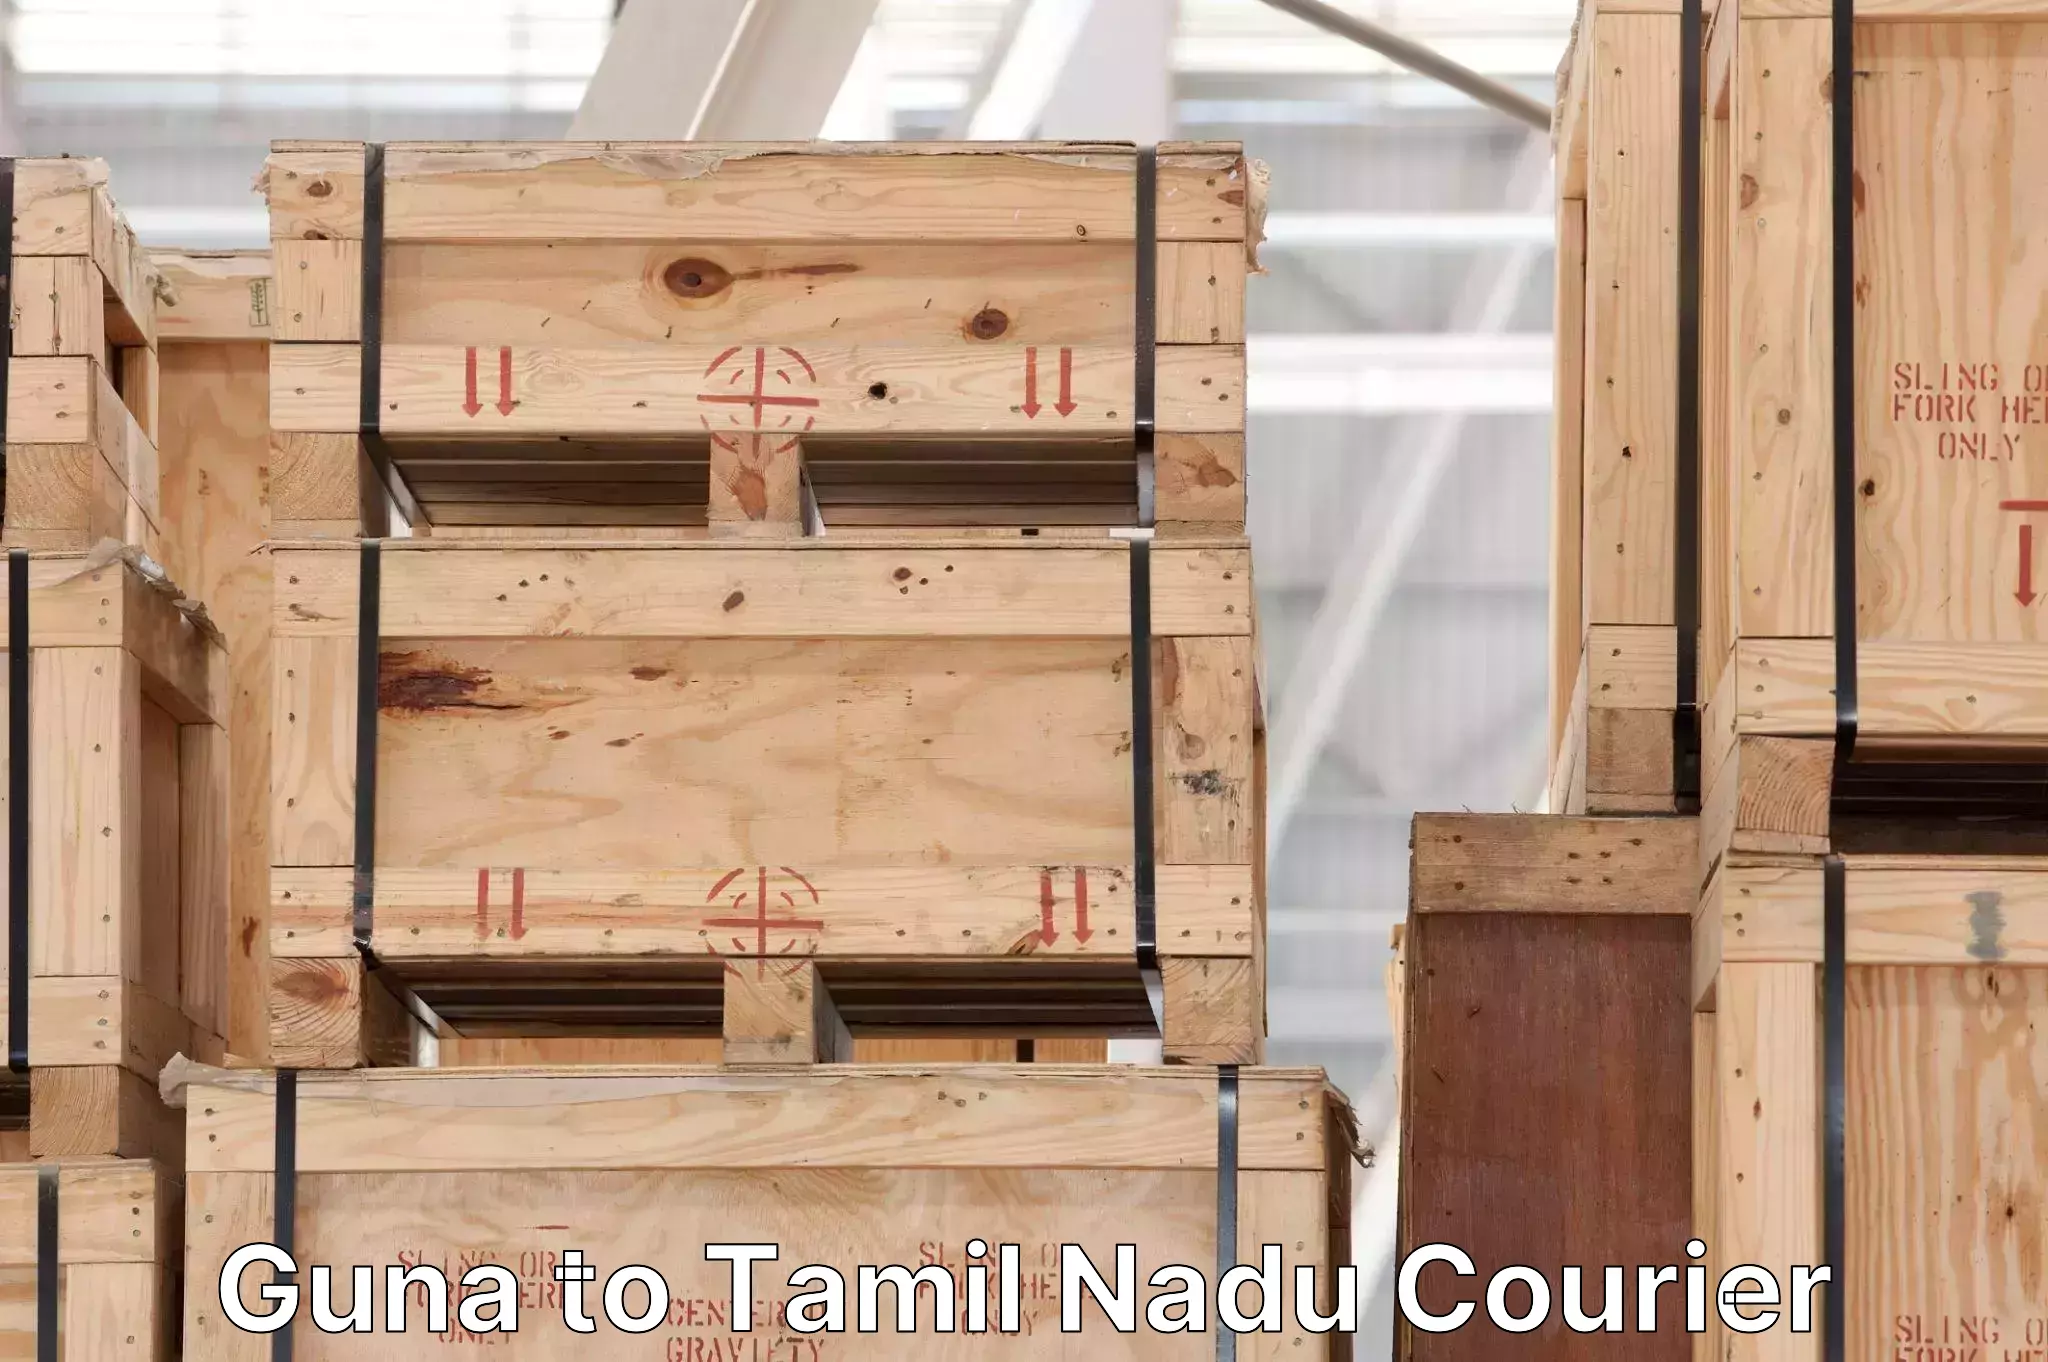 Nationwide delivery network Guna to Tamil Nadu